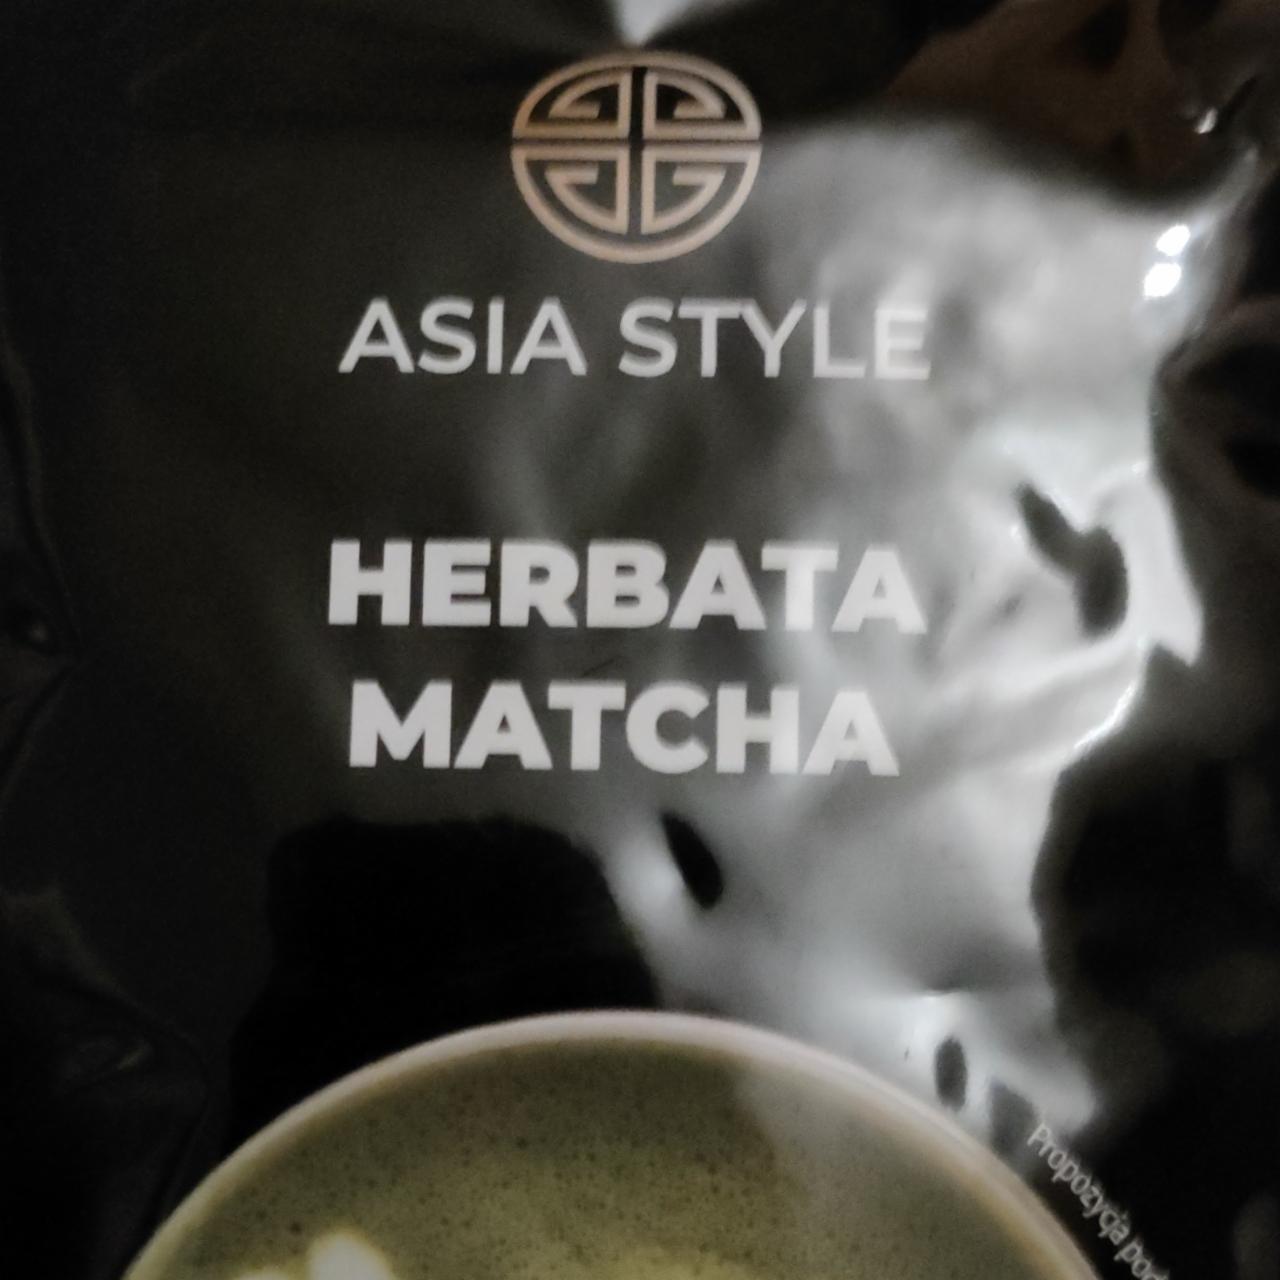 Zdjęcia - herbata matcha Asia Style